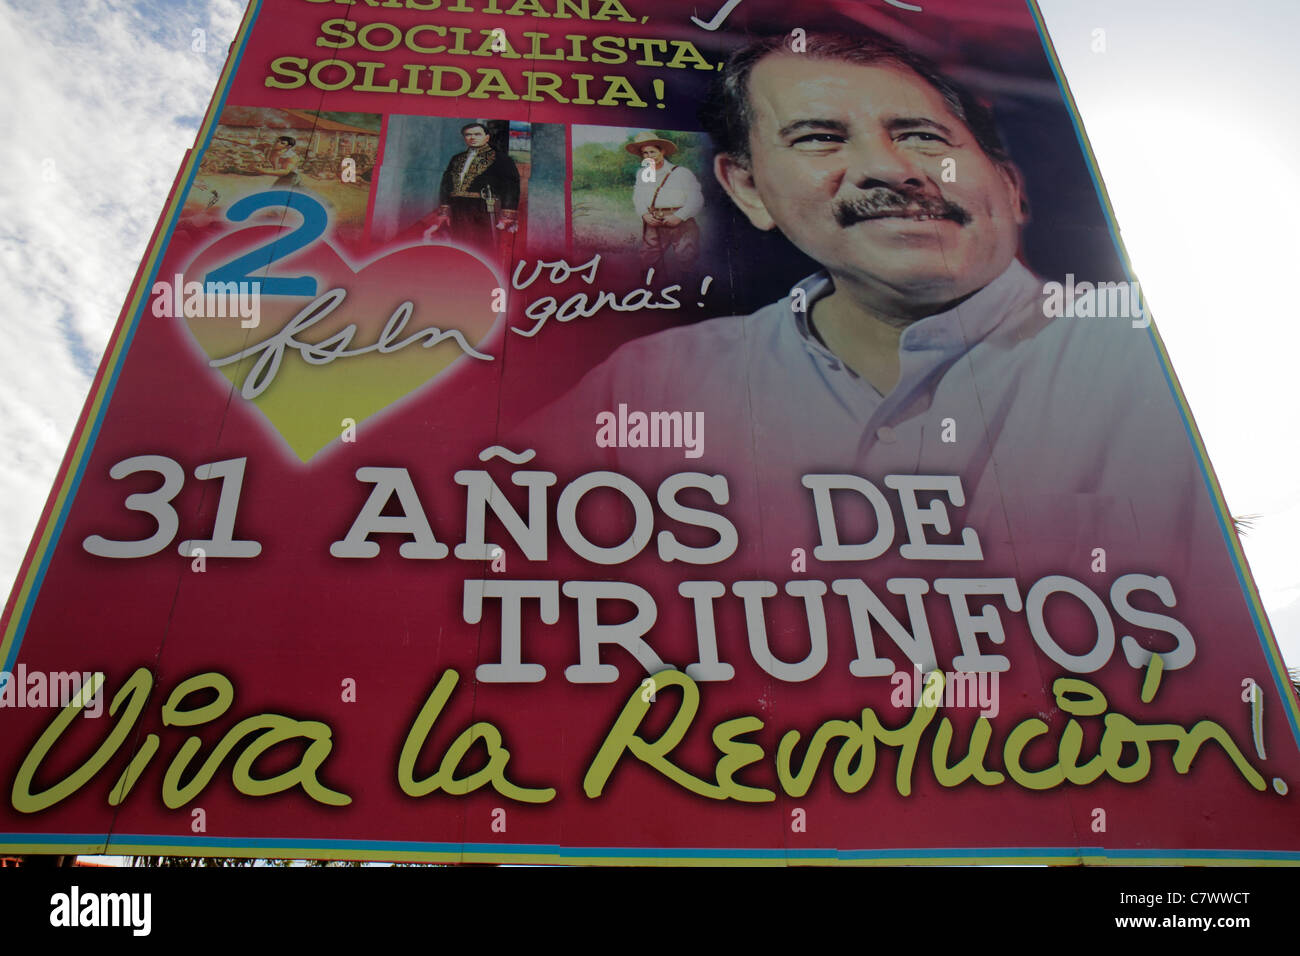 Managua Nicaragua,Central America,Calle Colon,political billboard,advertisement,ad advertising advertisement,Daniel Ortega,President,residents,governm Stock Photo